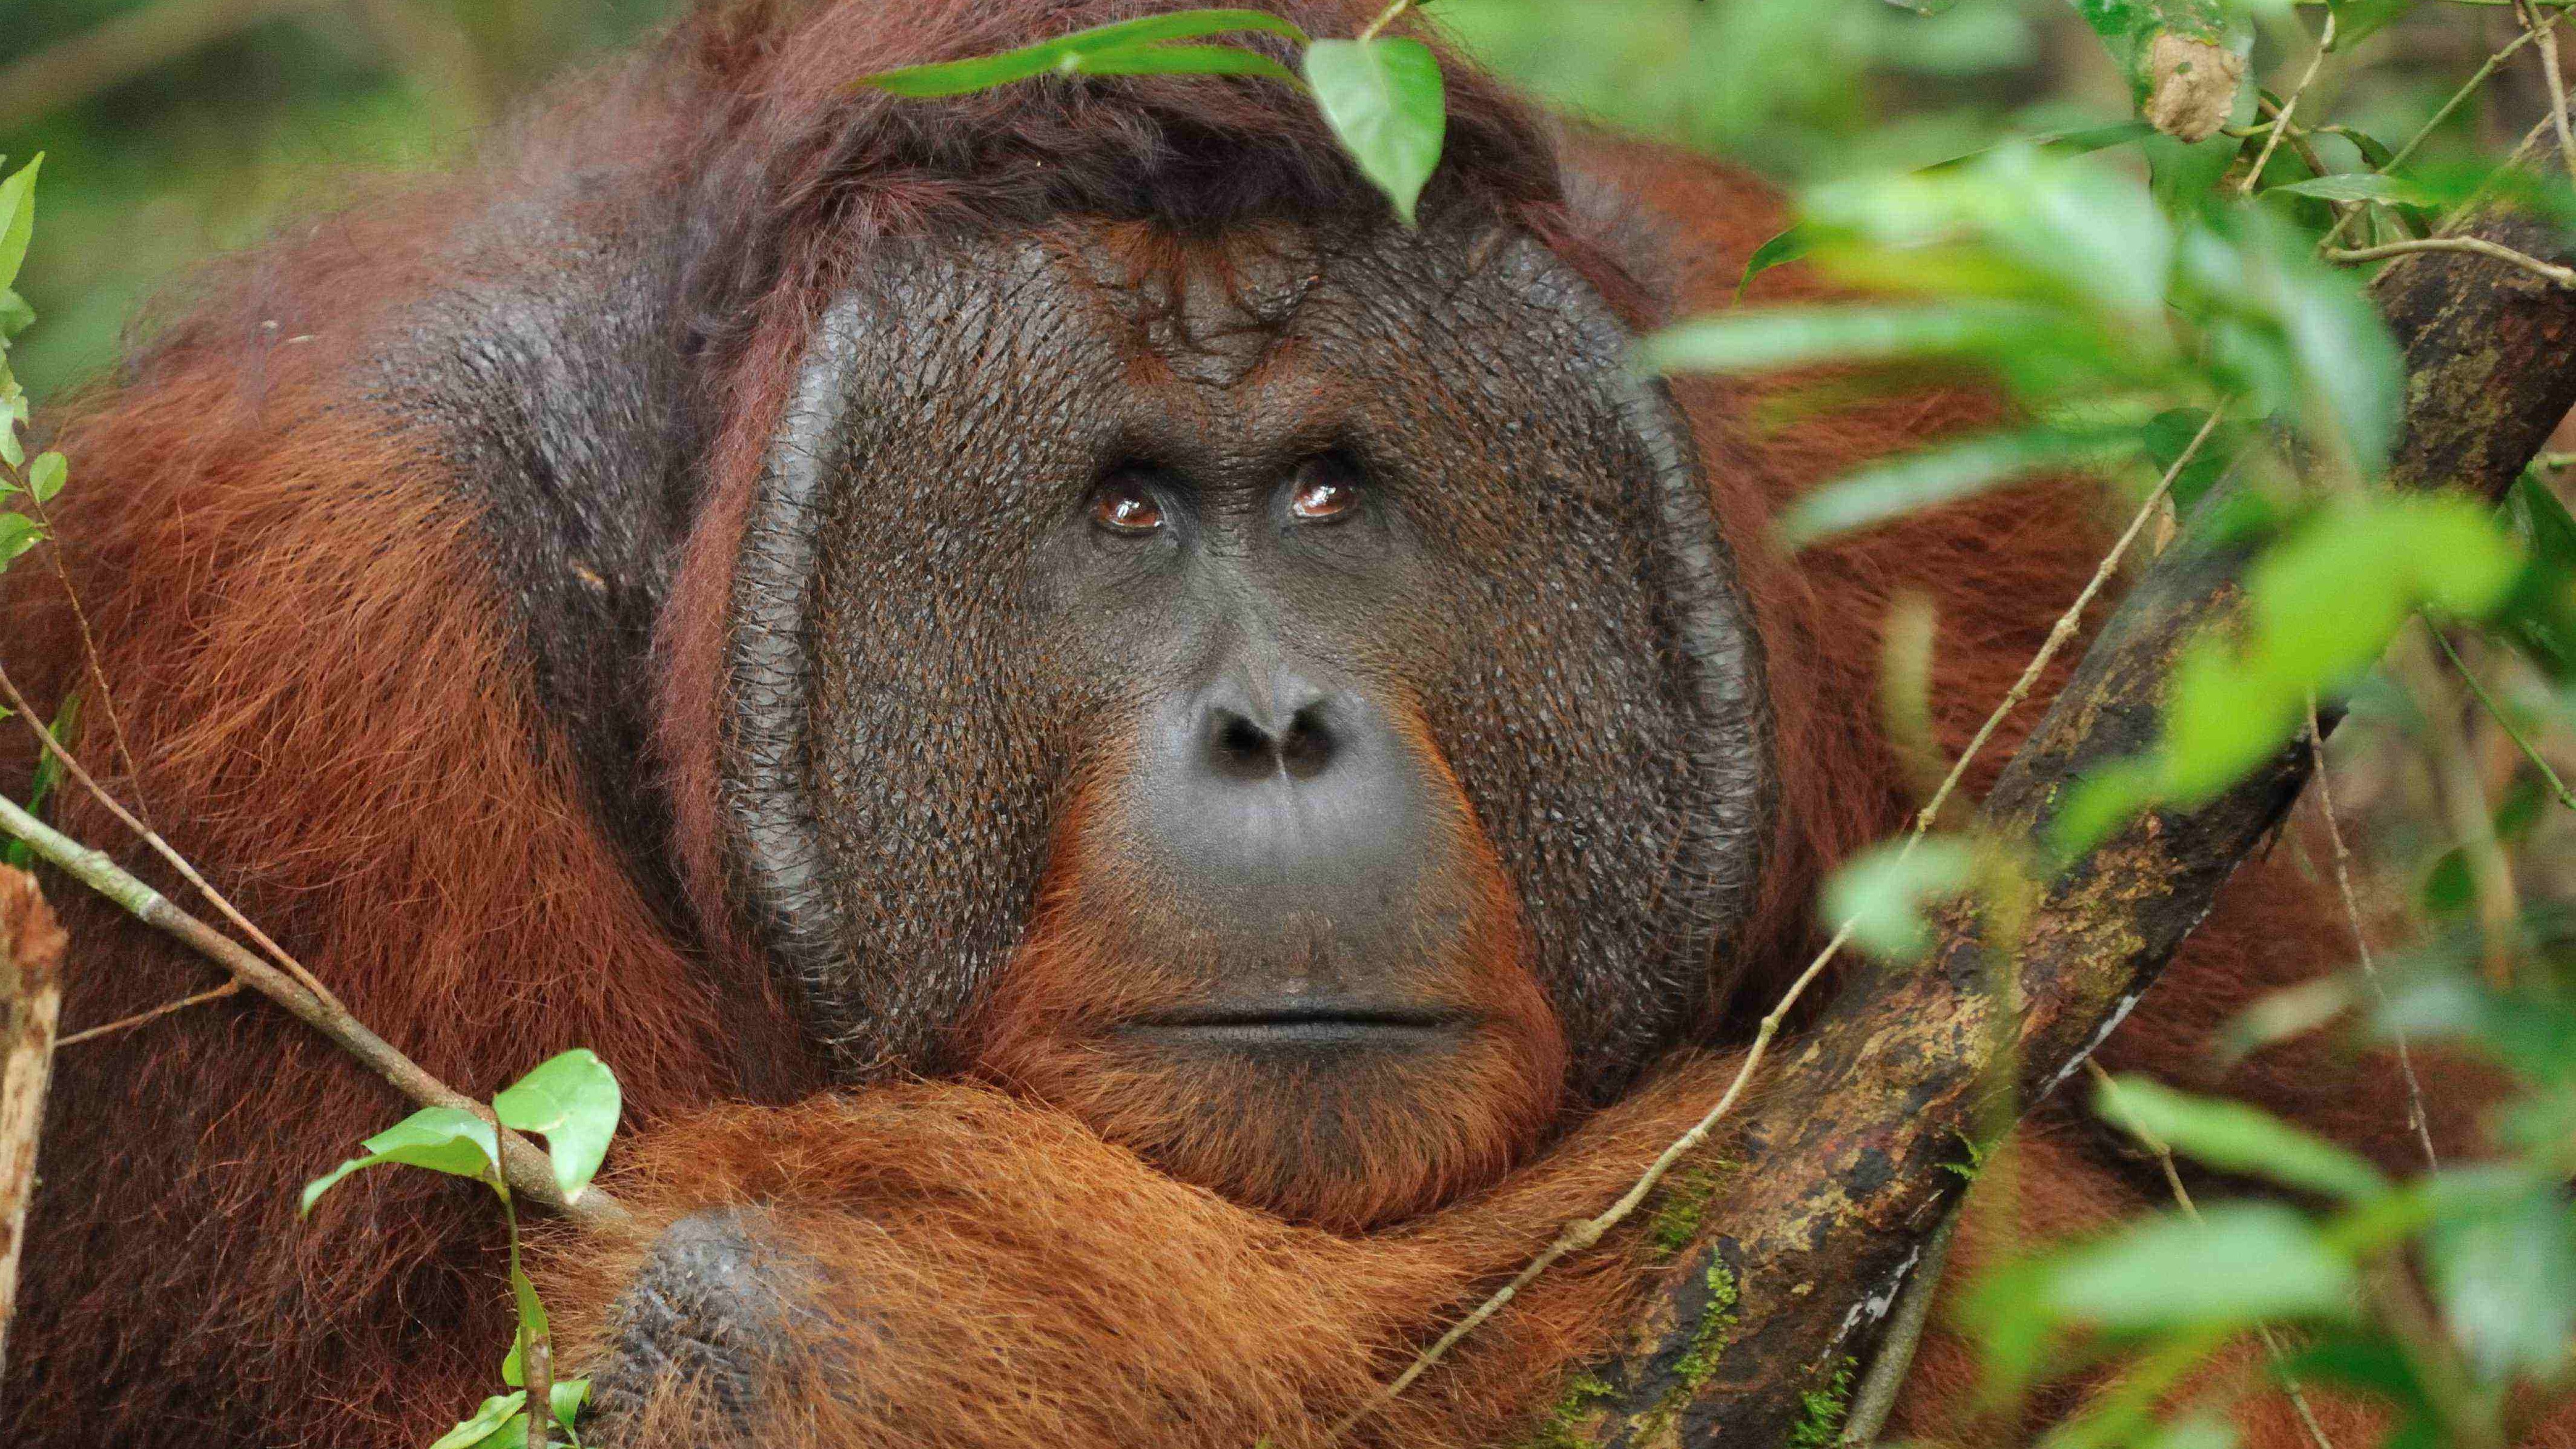 tanjung putting, camp leakey, pondok tanggui, wildlife orangutan jungle rain forest guide tour safari trip borneo kalimantan indonesia